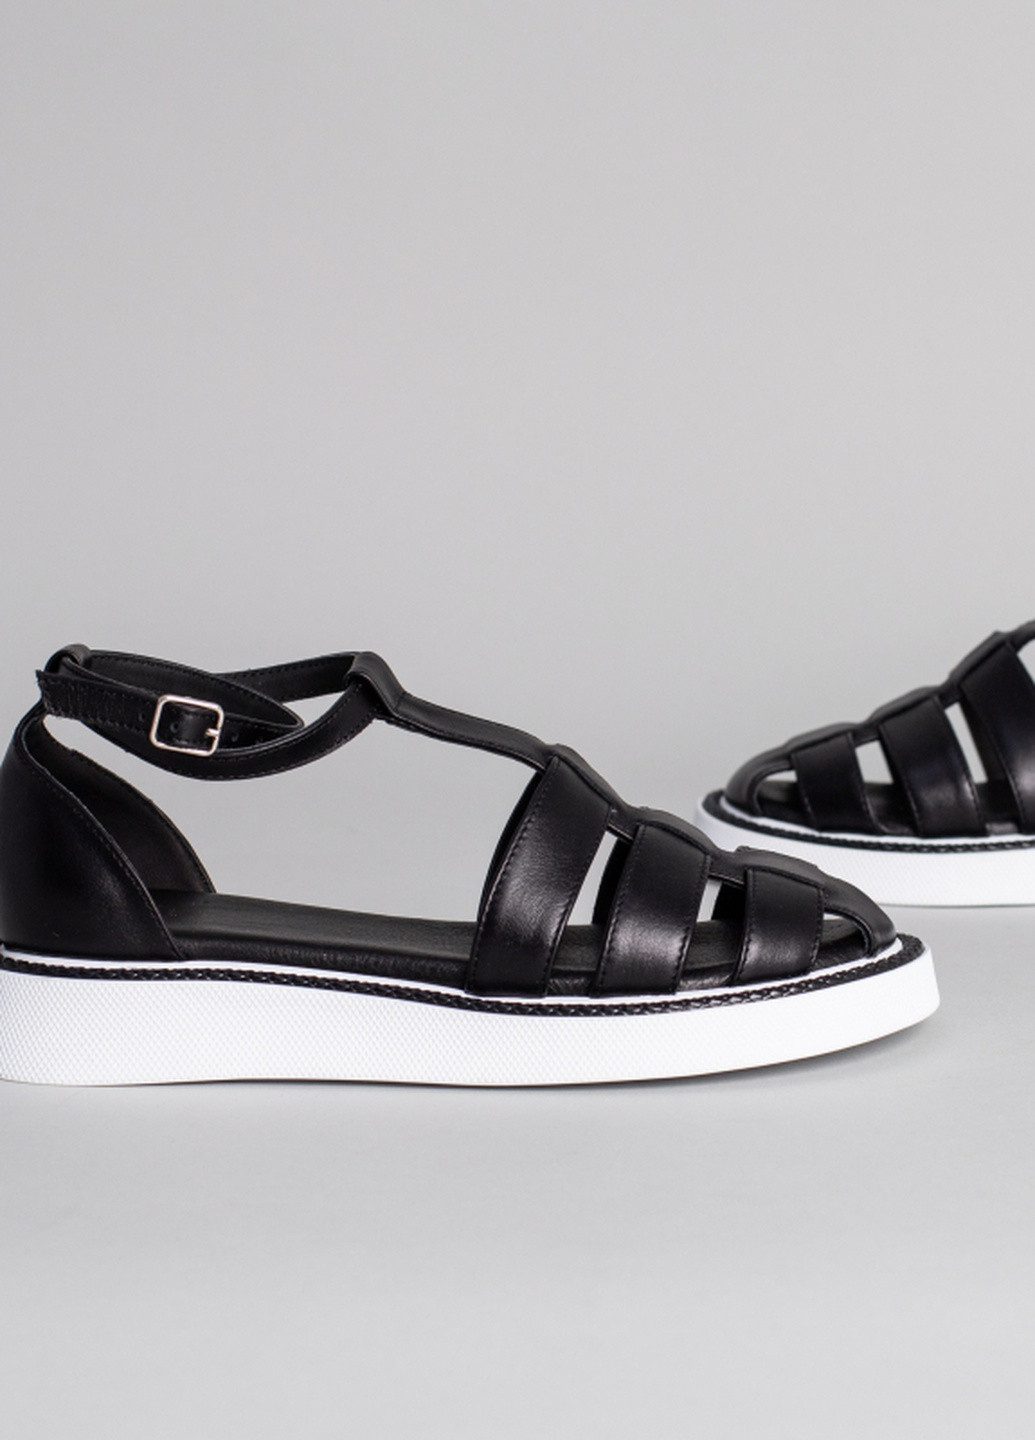 Черные босоножки shoesband Brand без застежки